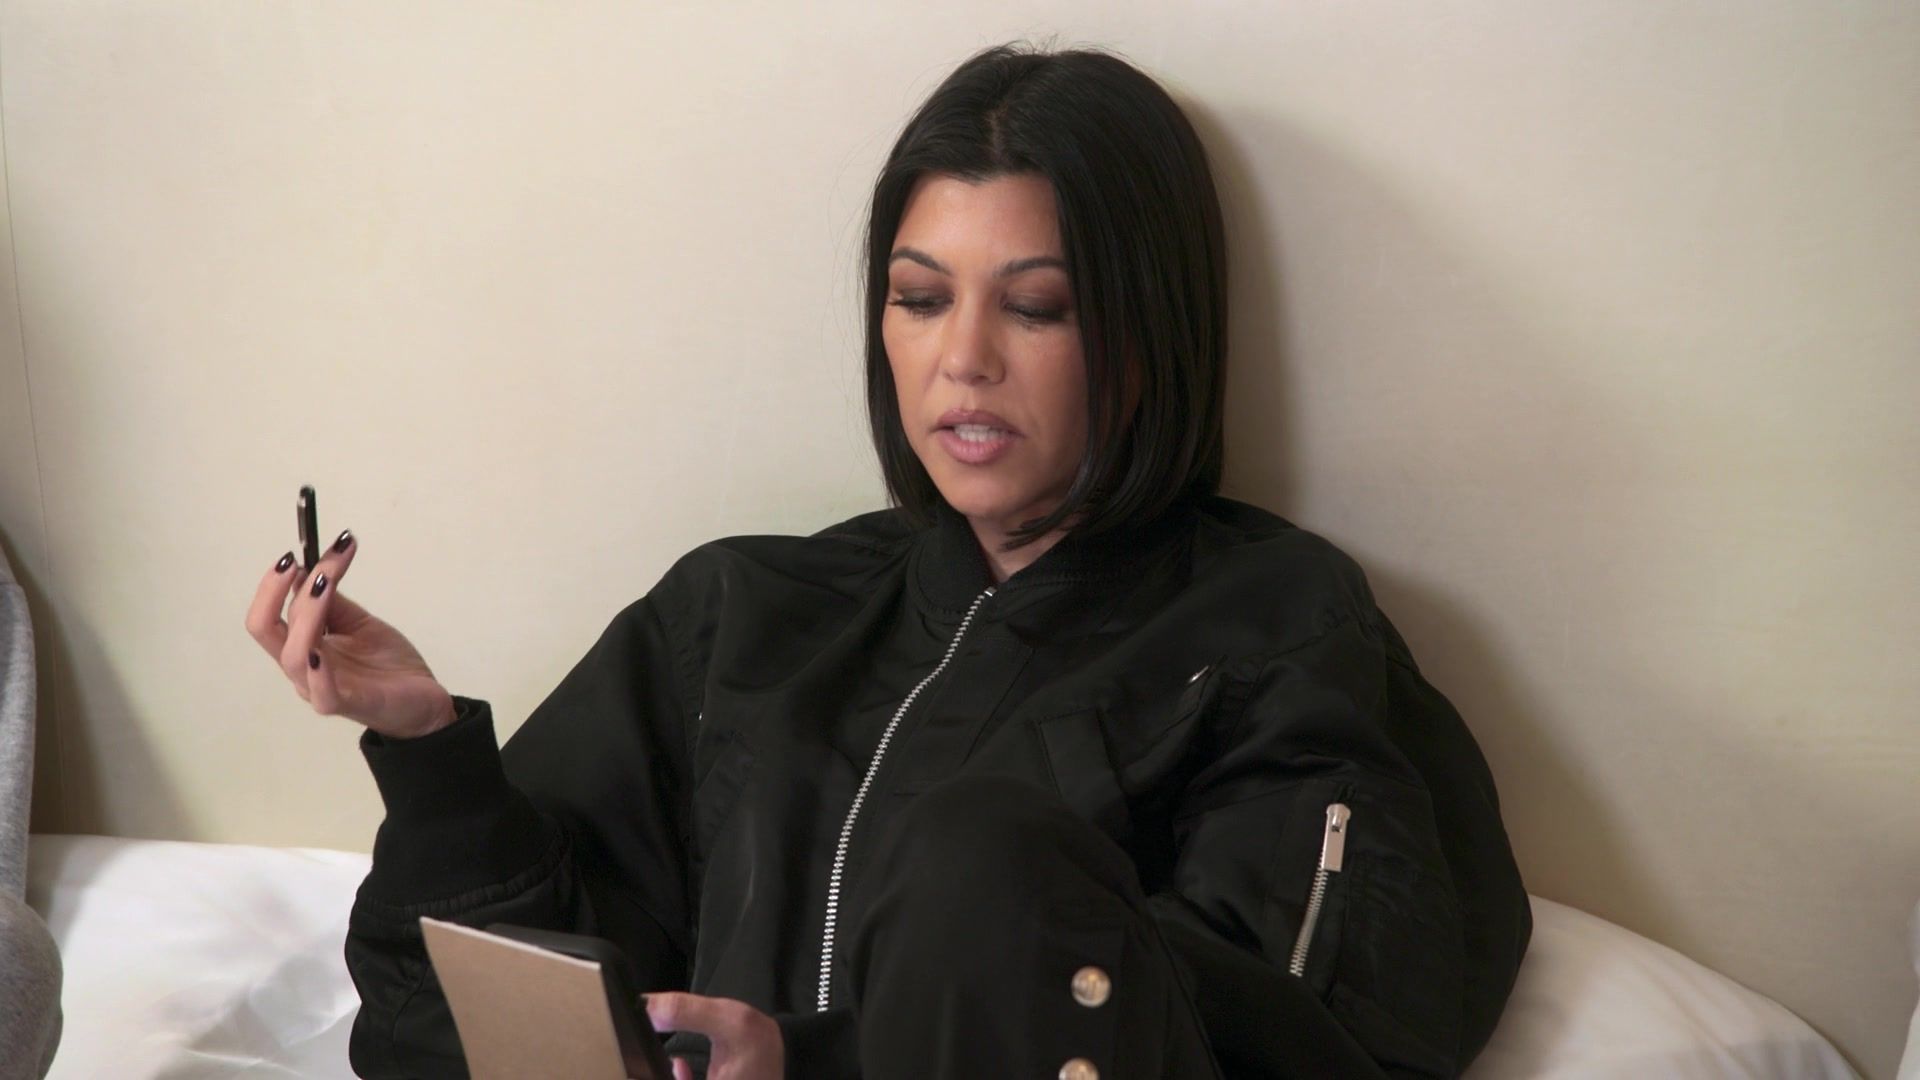 Worn on The Kardashians TV Show - Black Bomber Jacket